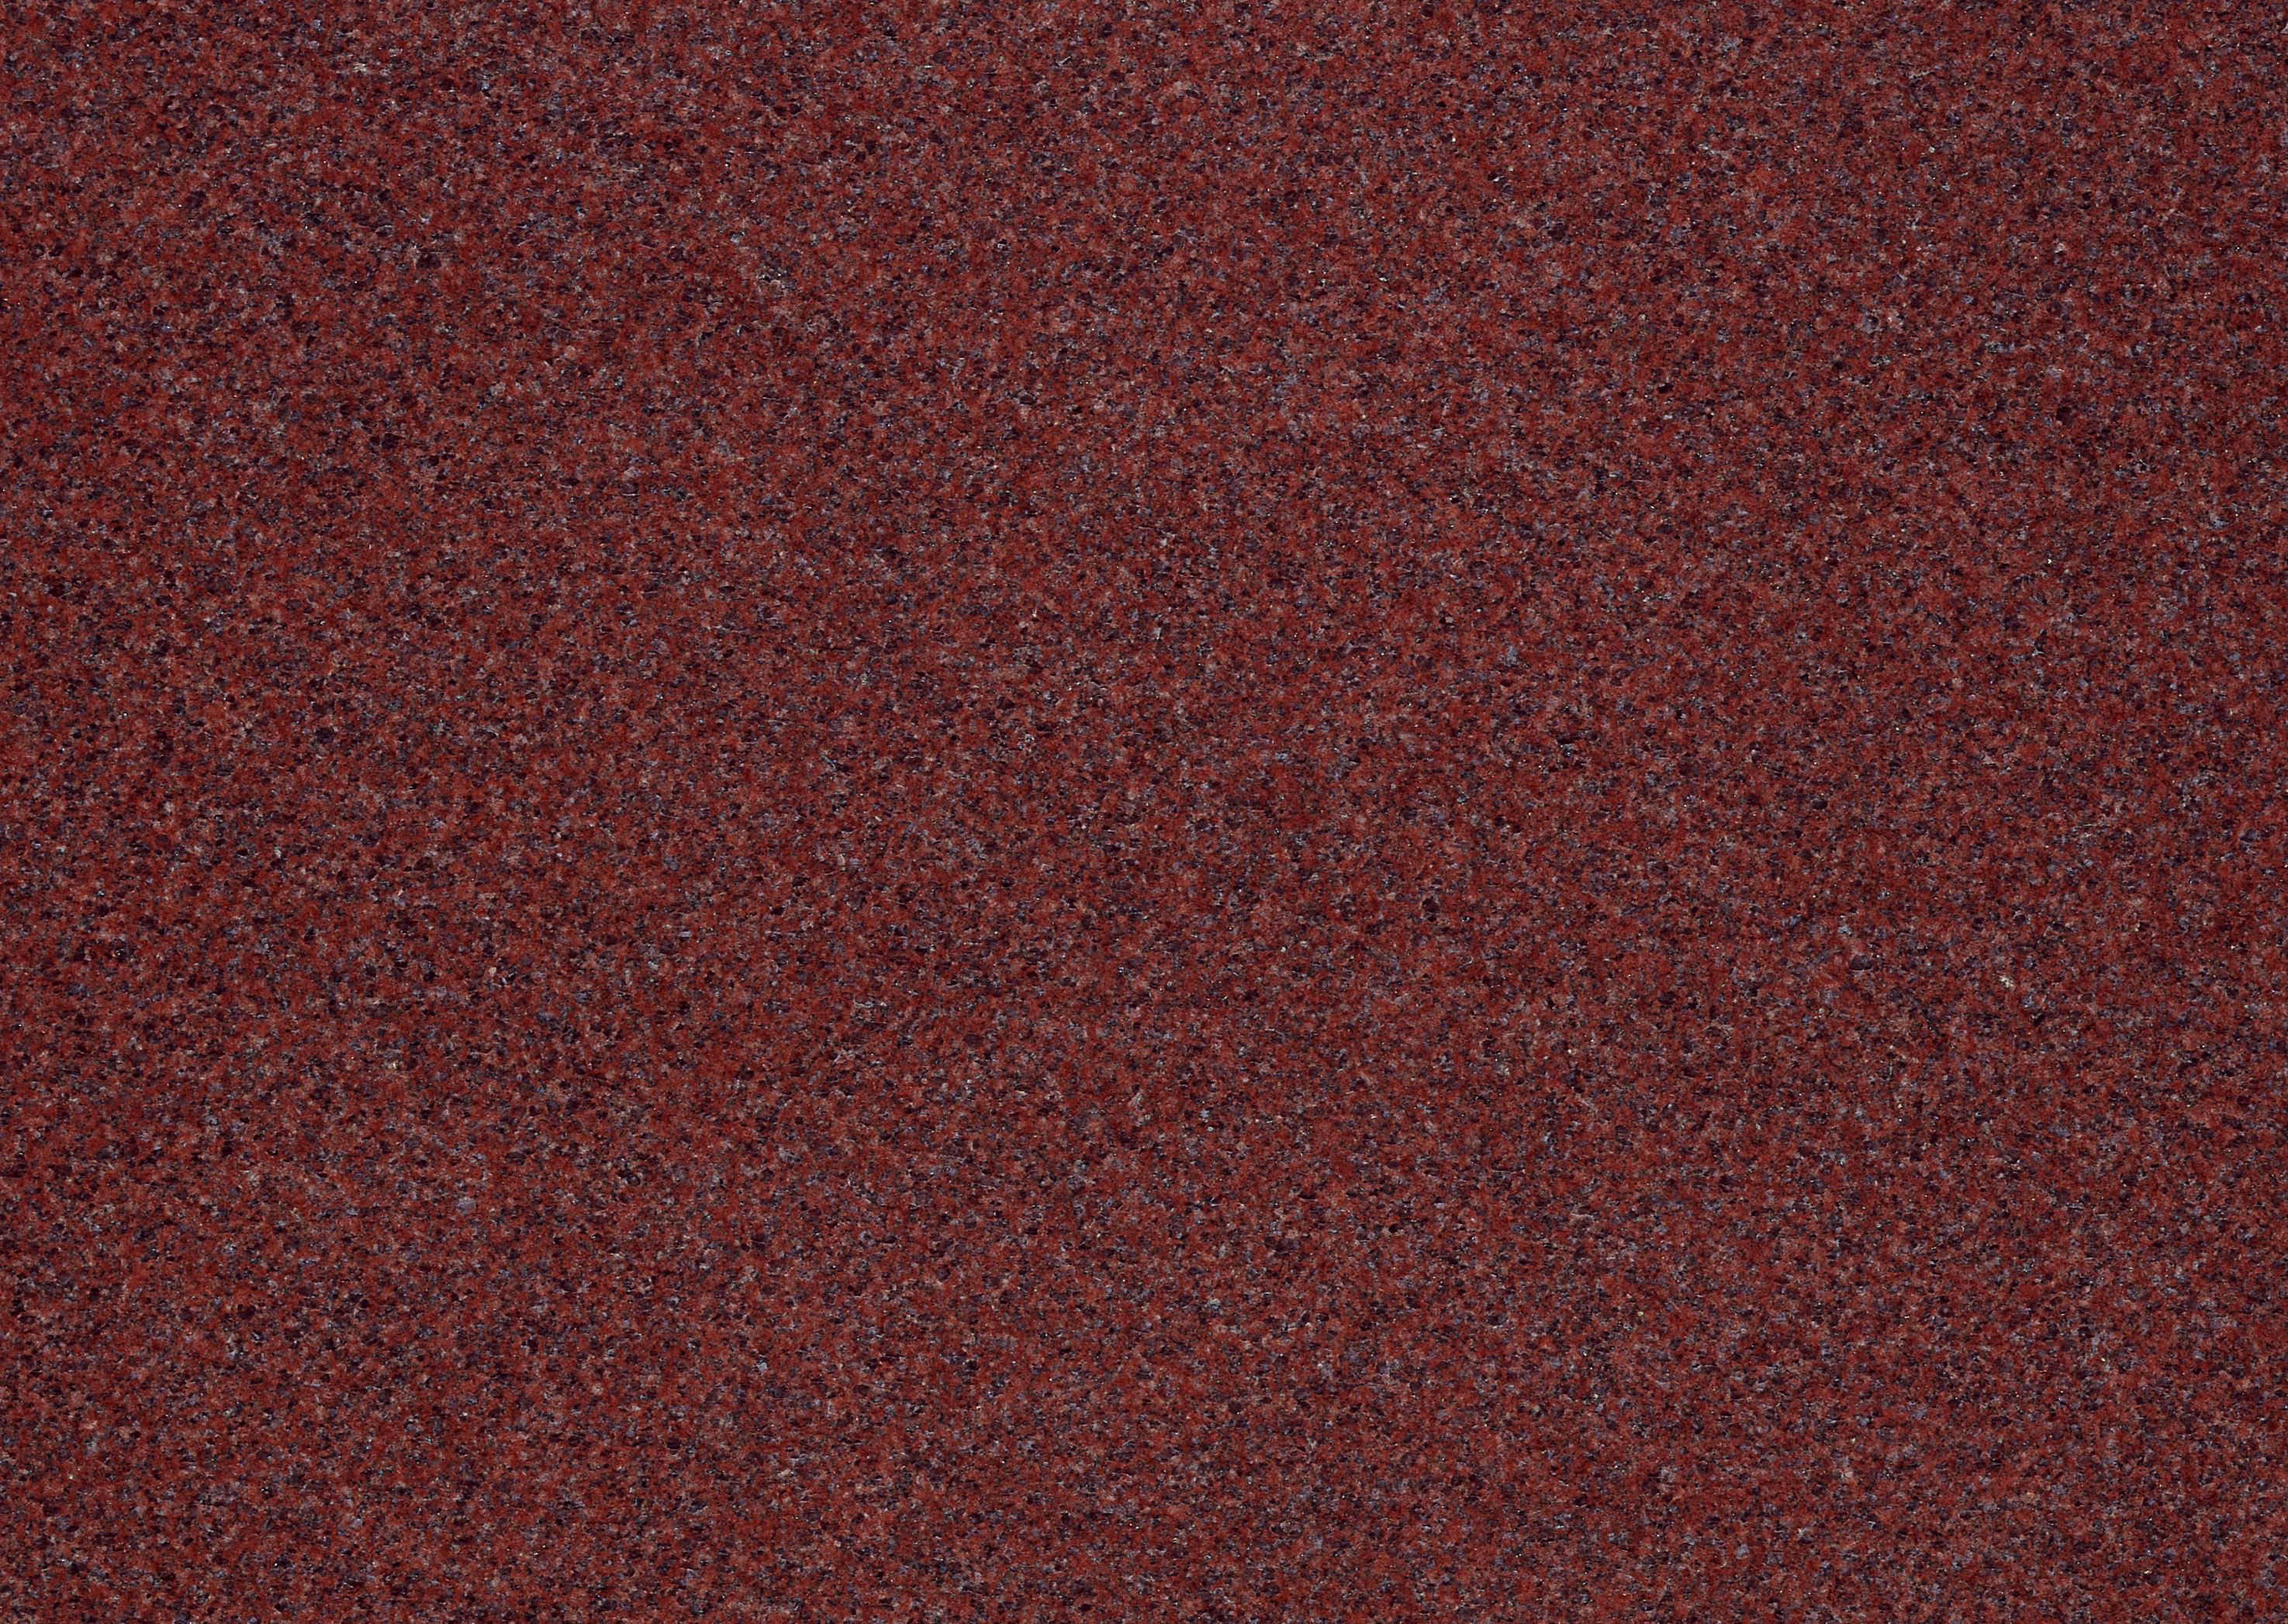 Red granite stone texture background image